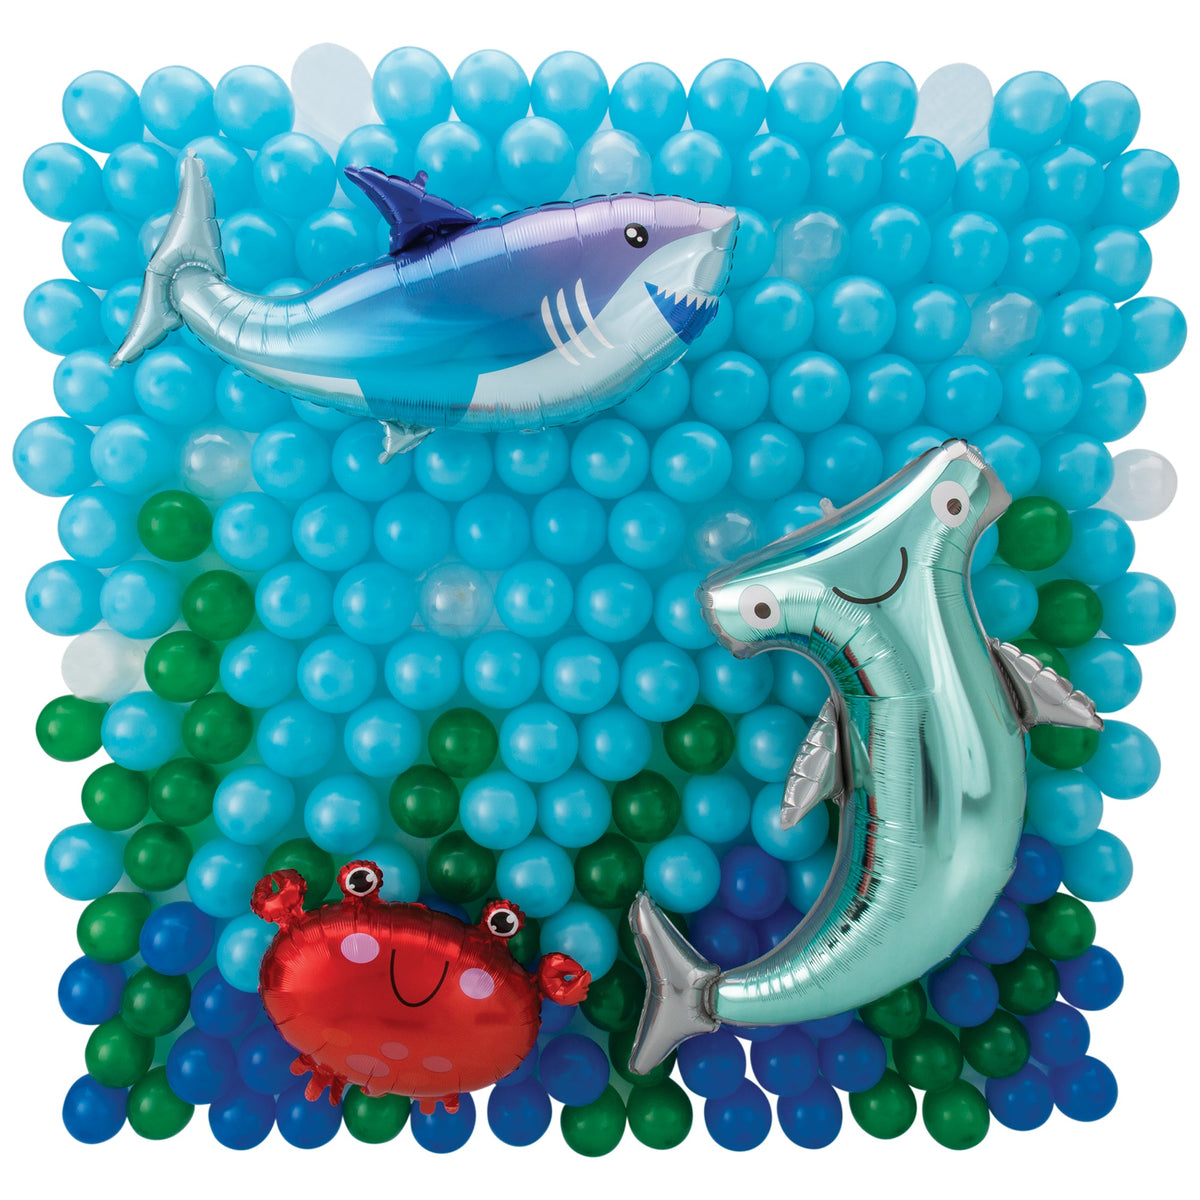 Sea Latex & Foil Balloon Backdrop Kit, Air-Filled